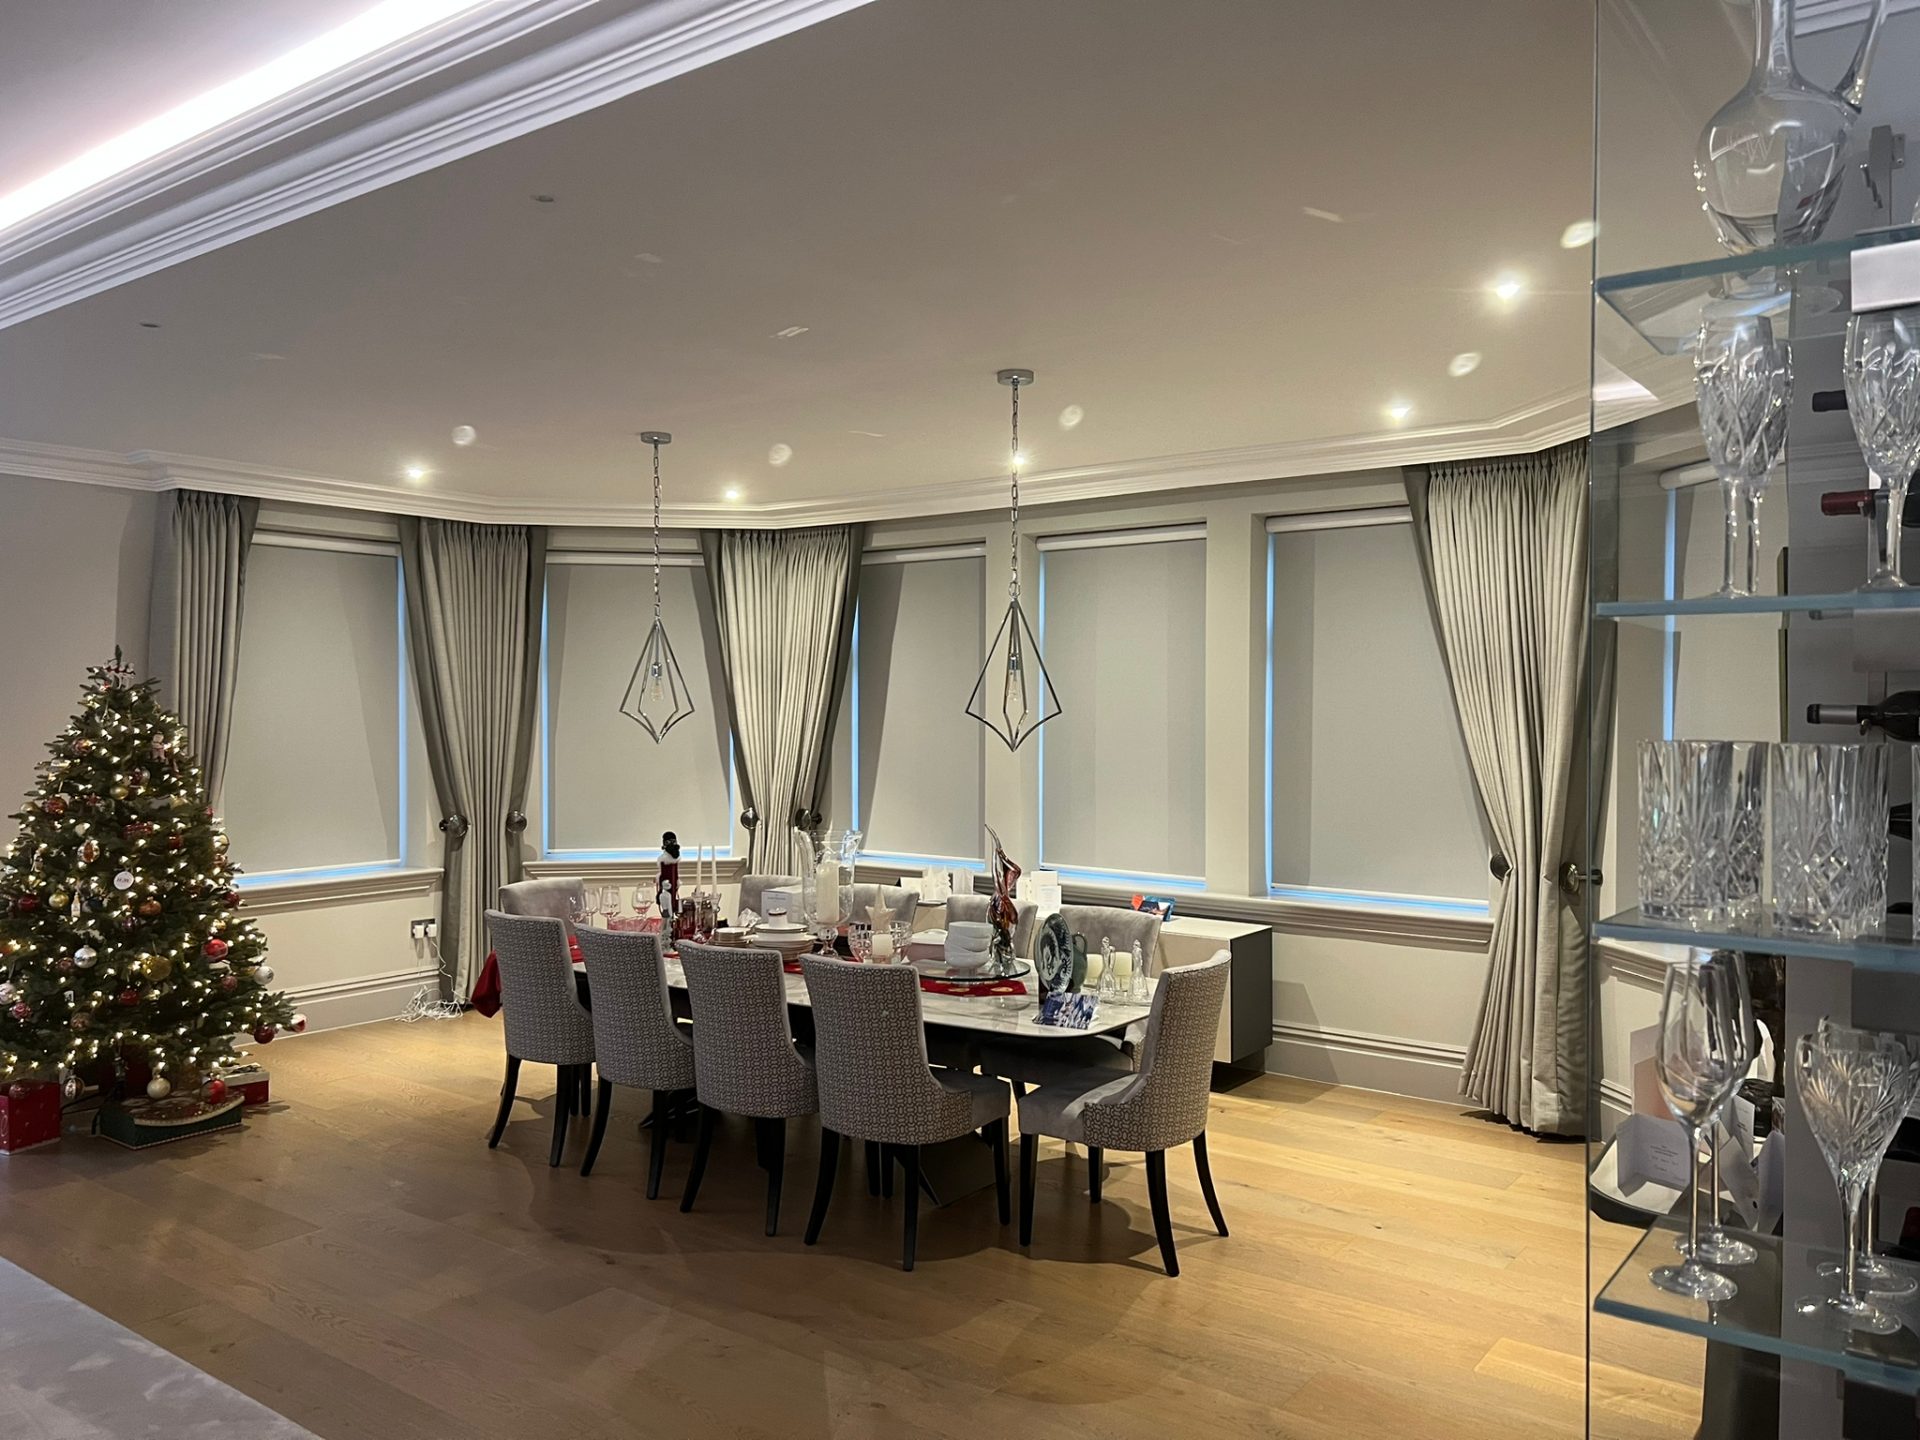 ULTRA Smart Roller blinds in dining room